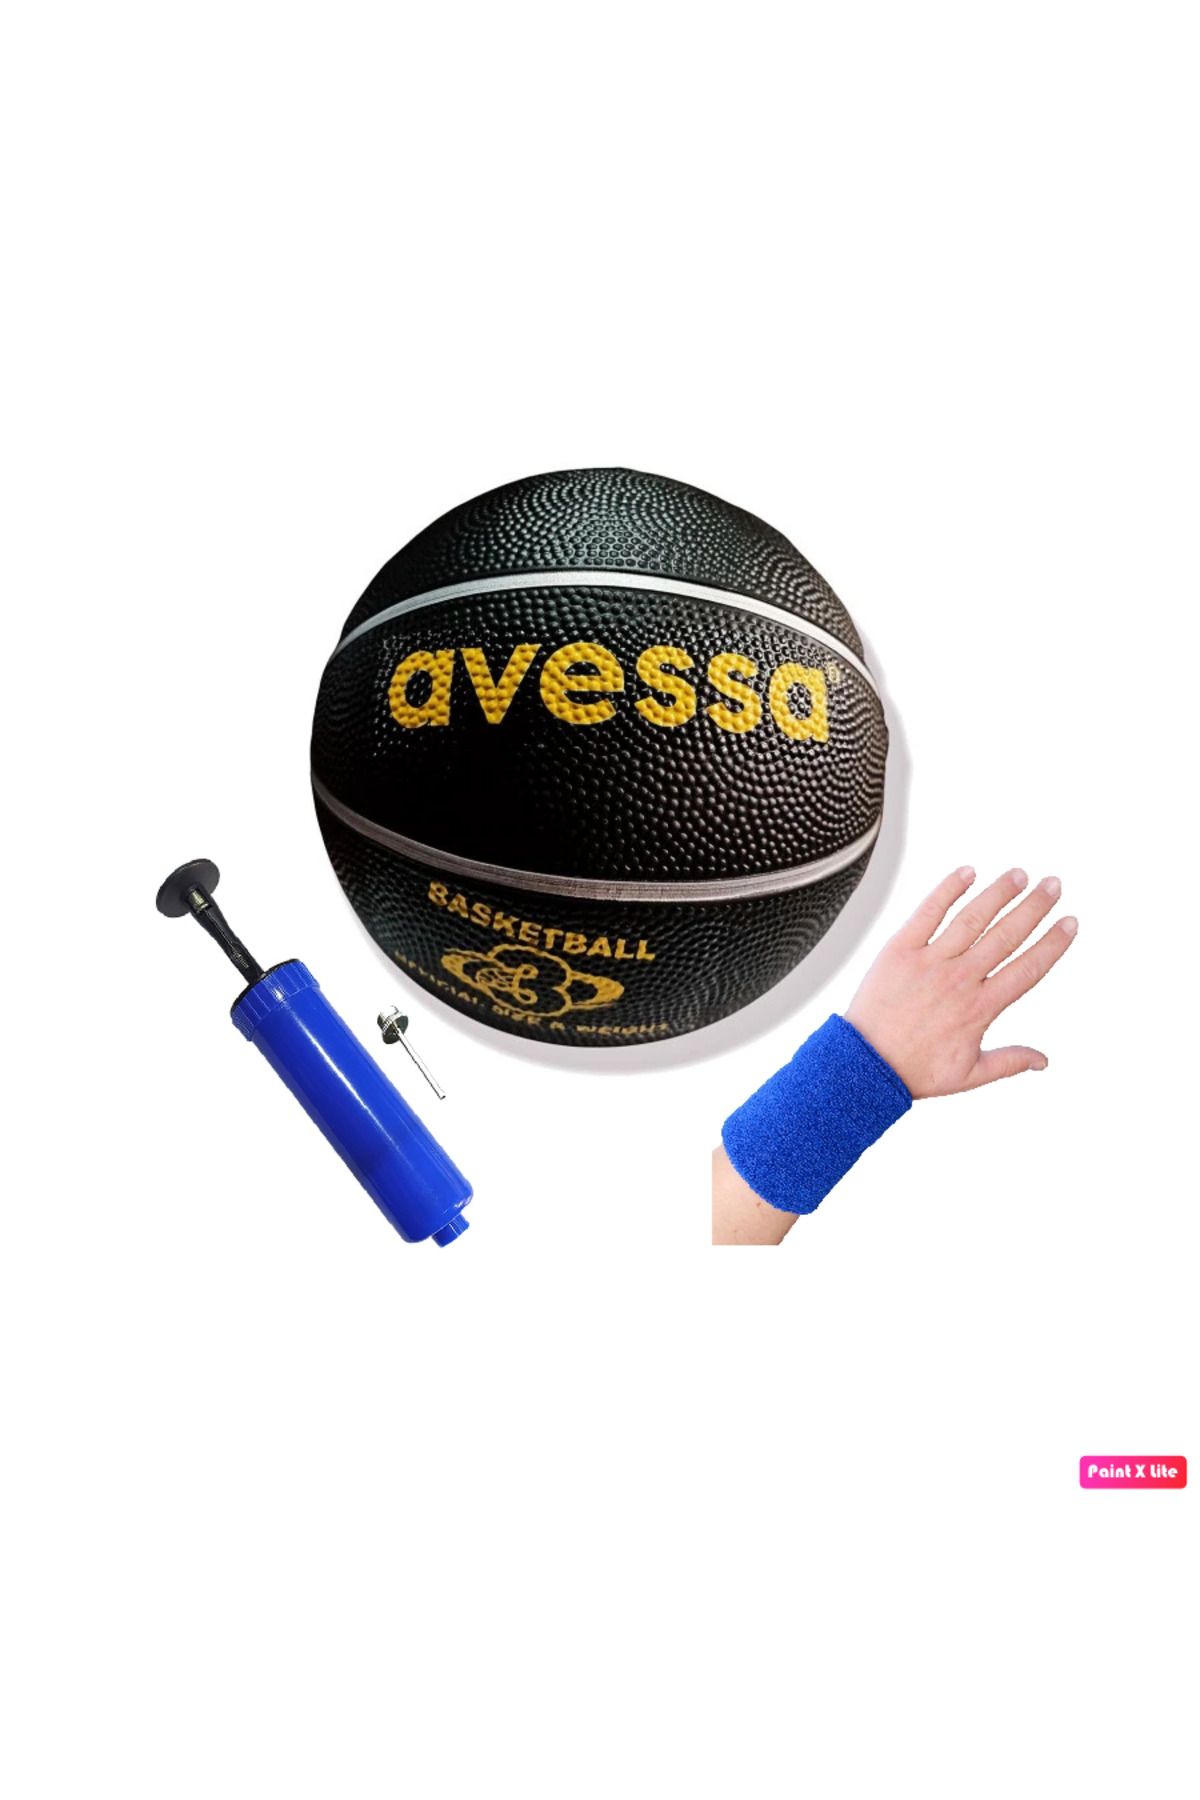 Avessa Brc-3 Basket Topu Unisex Kauçuk Soft Touch Basketbol Topu 280 gr No 3 + Pompa + Havlu Bileklik